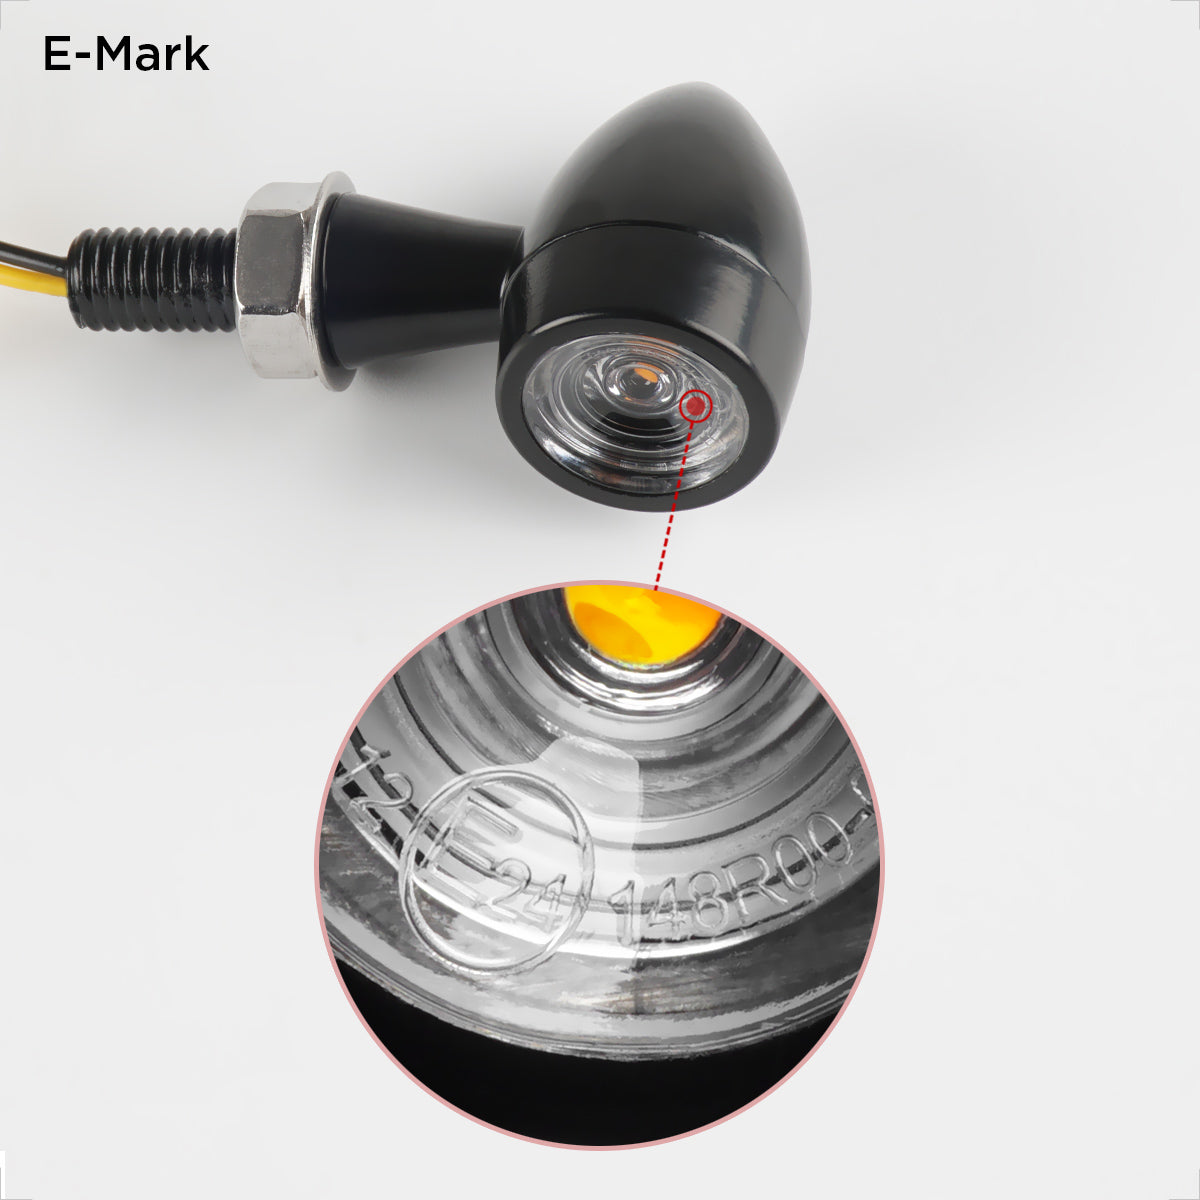 Evermotor Mini LED Blinker - E-geprüft, Wasserdicht, und Stilvoll!